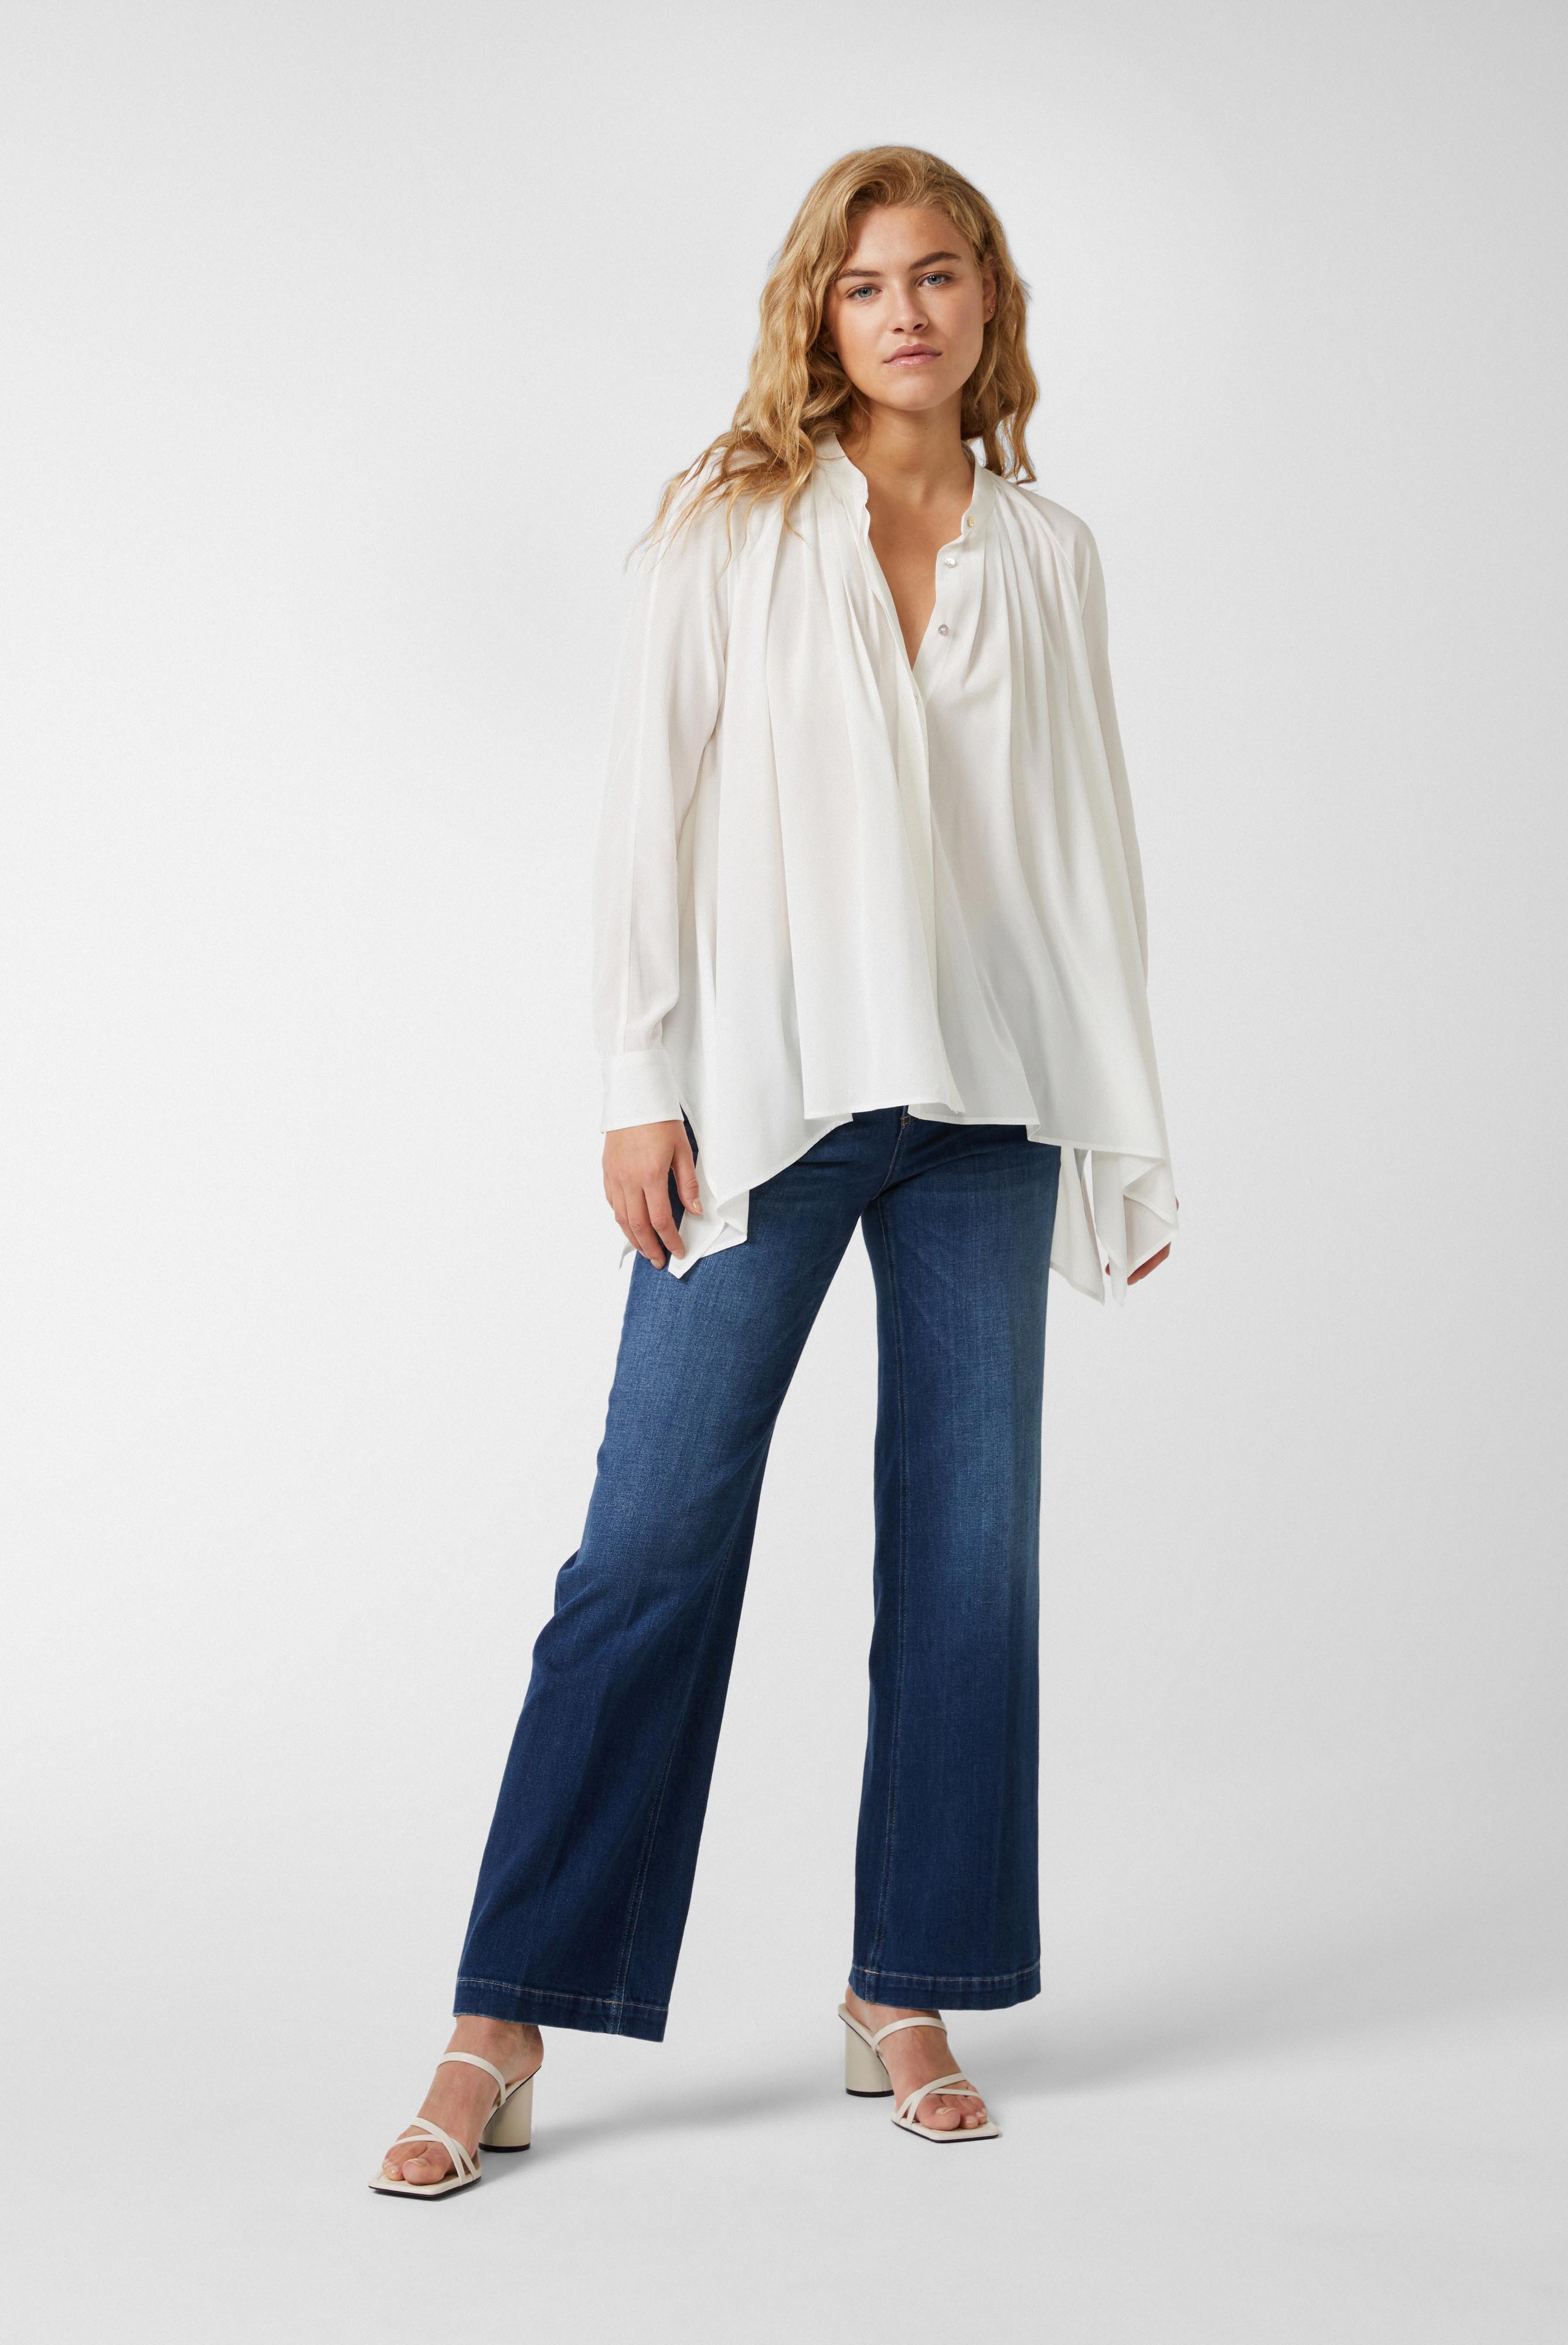 Meisterwerk Blouses+Crepe blouse with asymmetric hem white+05.525P.07.155553.105.40